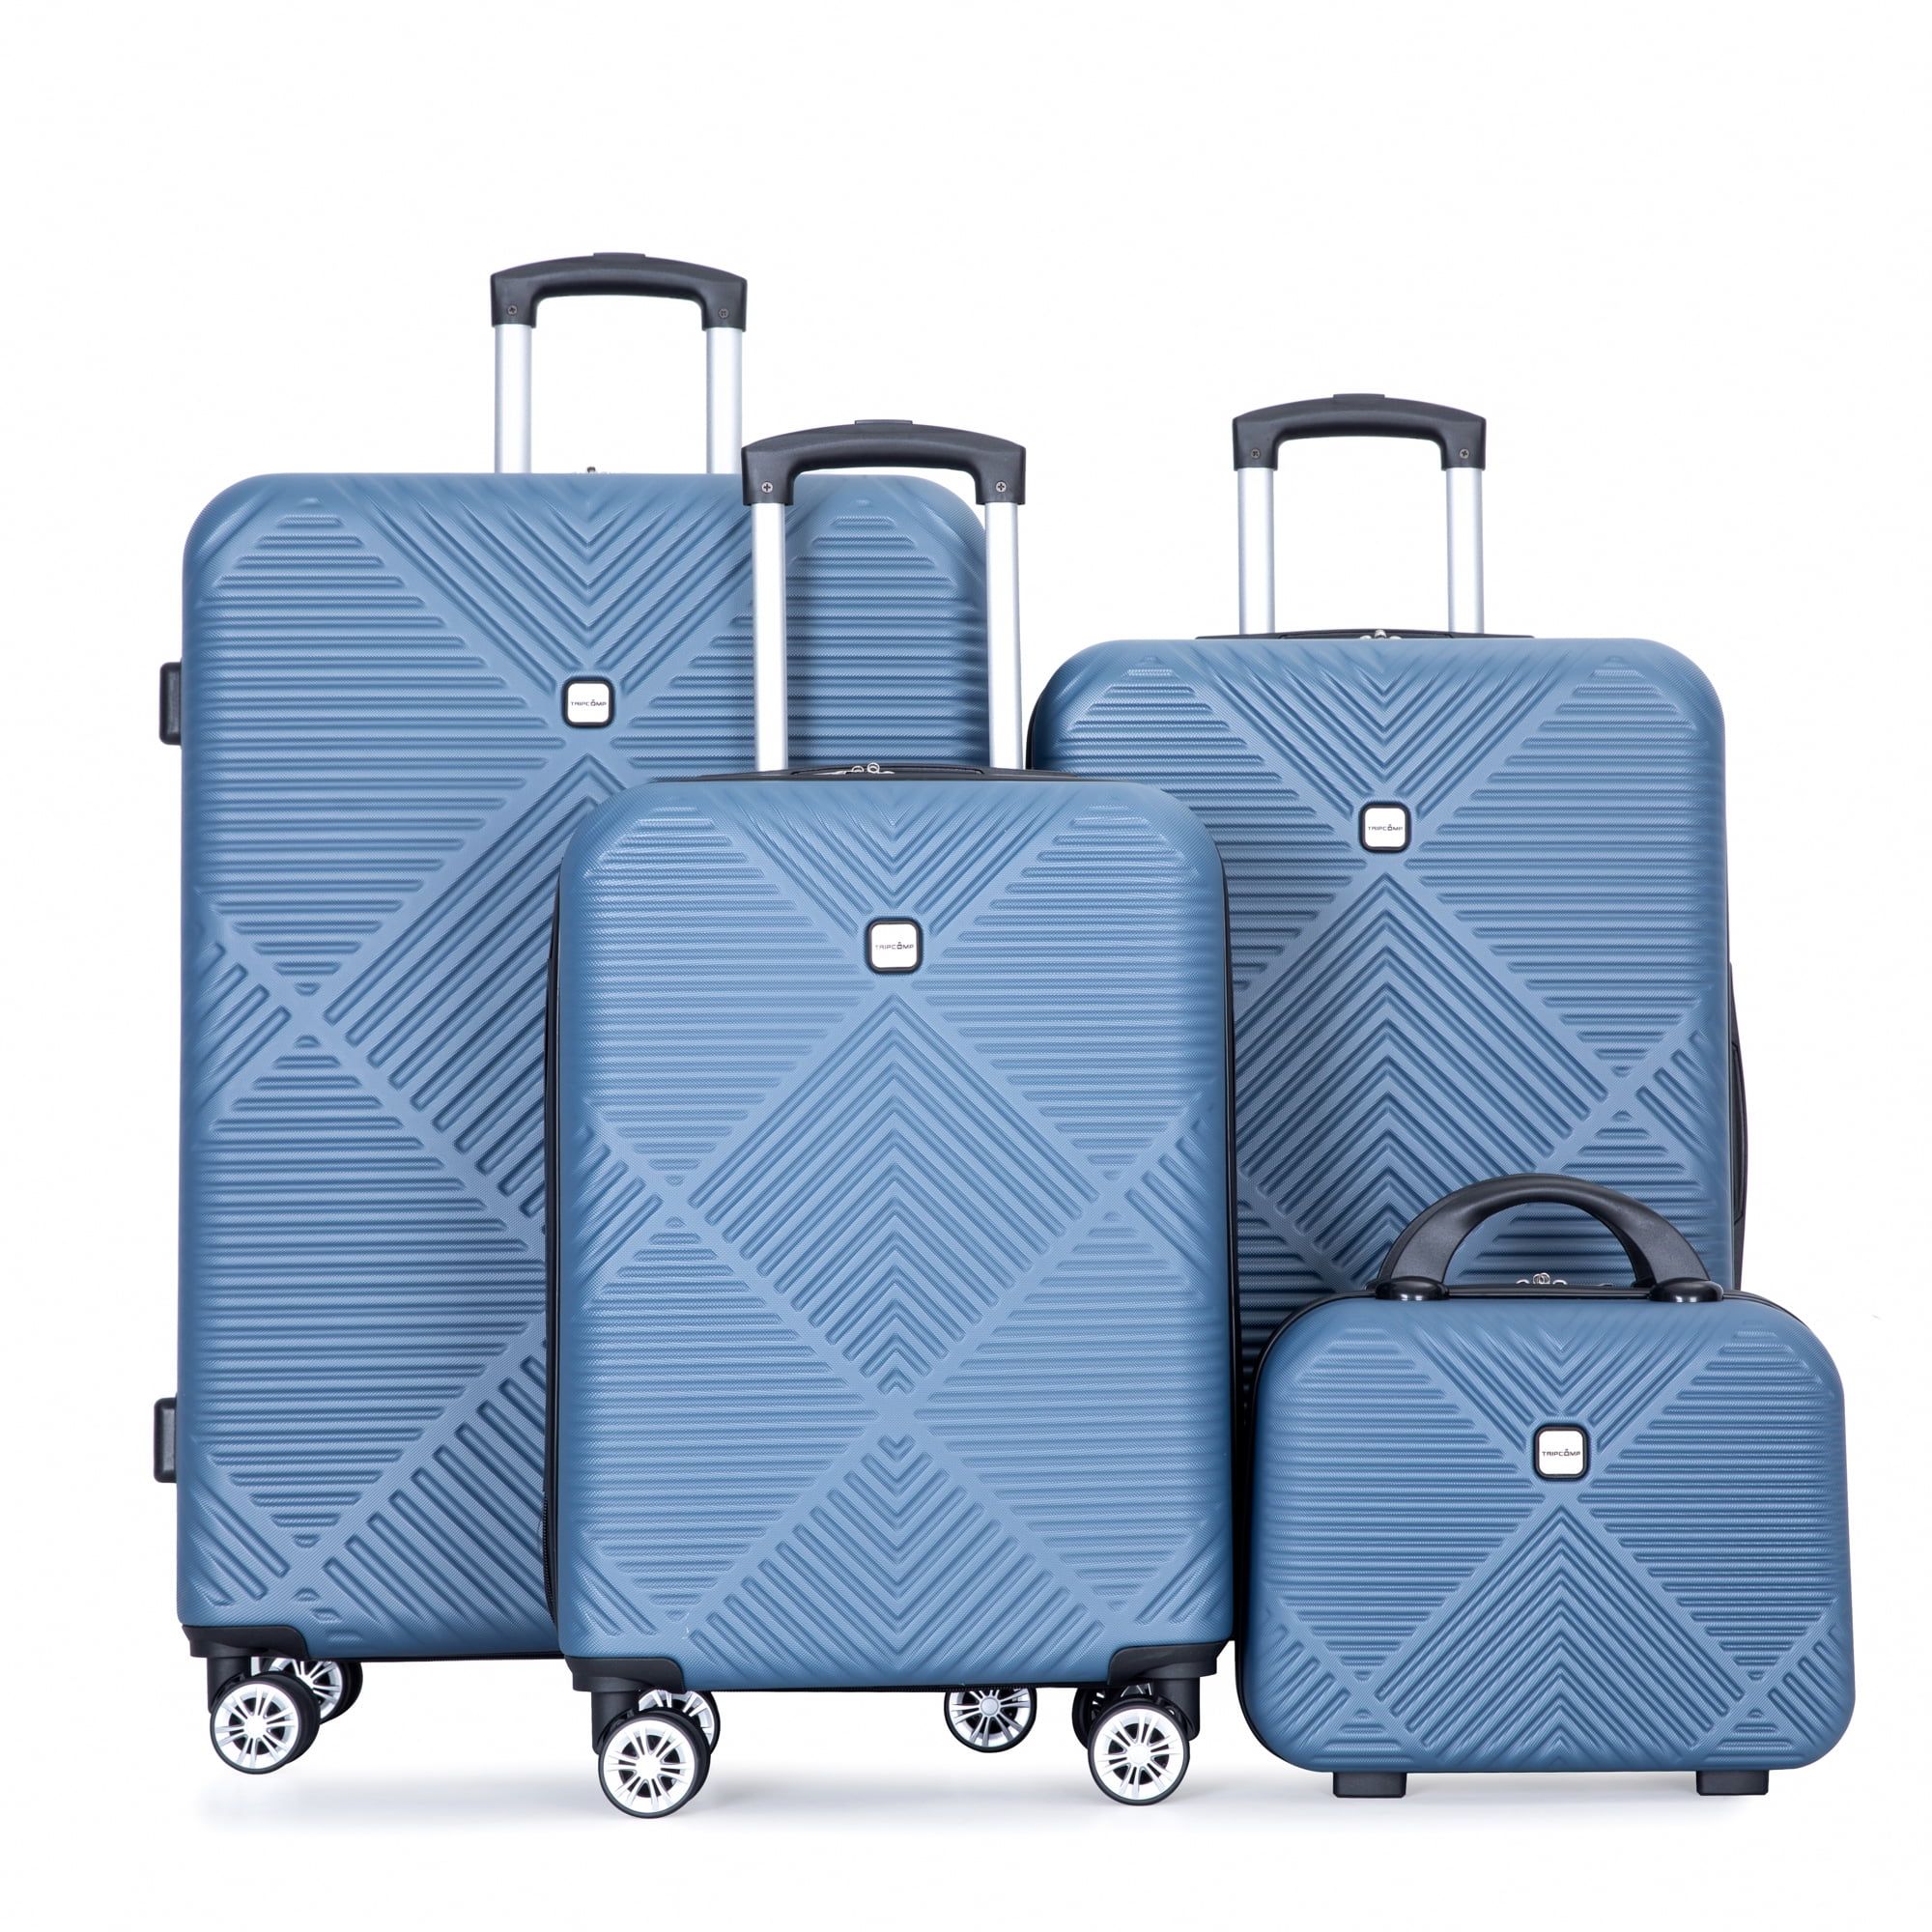 Tripcomp Luggage Sets 4 Piece Suitcase Set (14/20/24/28)Hardside Suitcase with Spinner Wheels Lig... | Walmart (US)